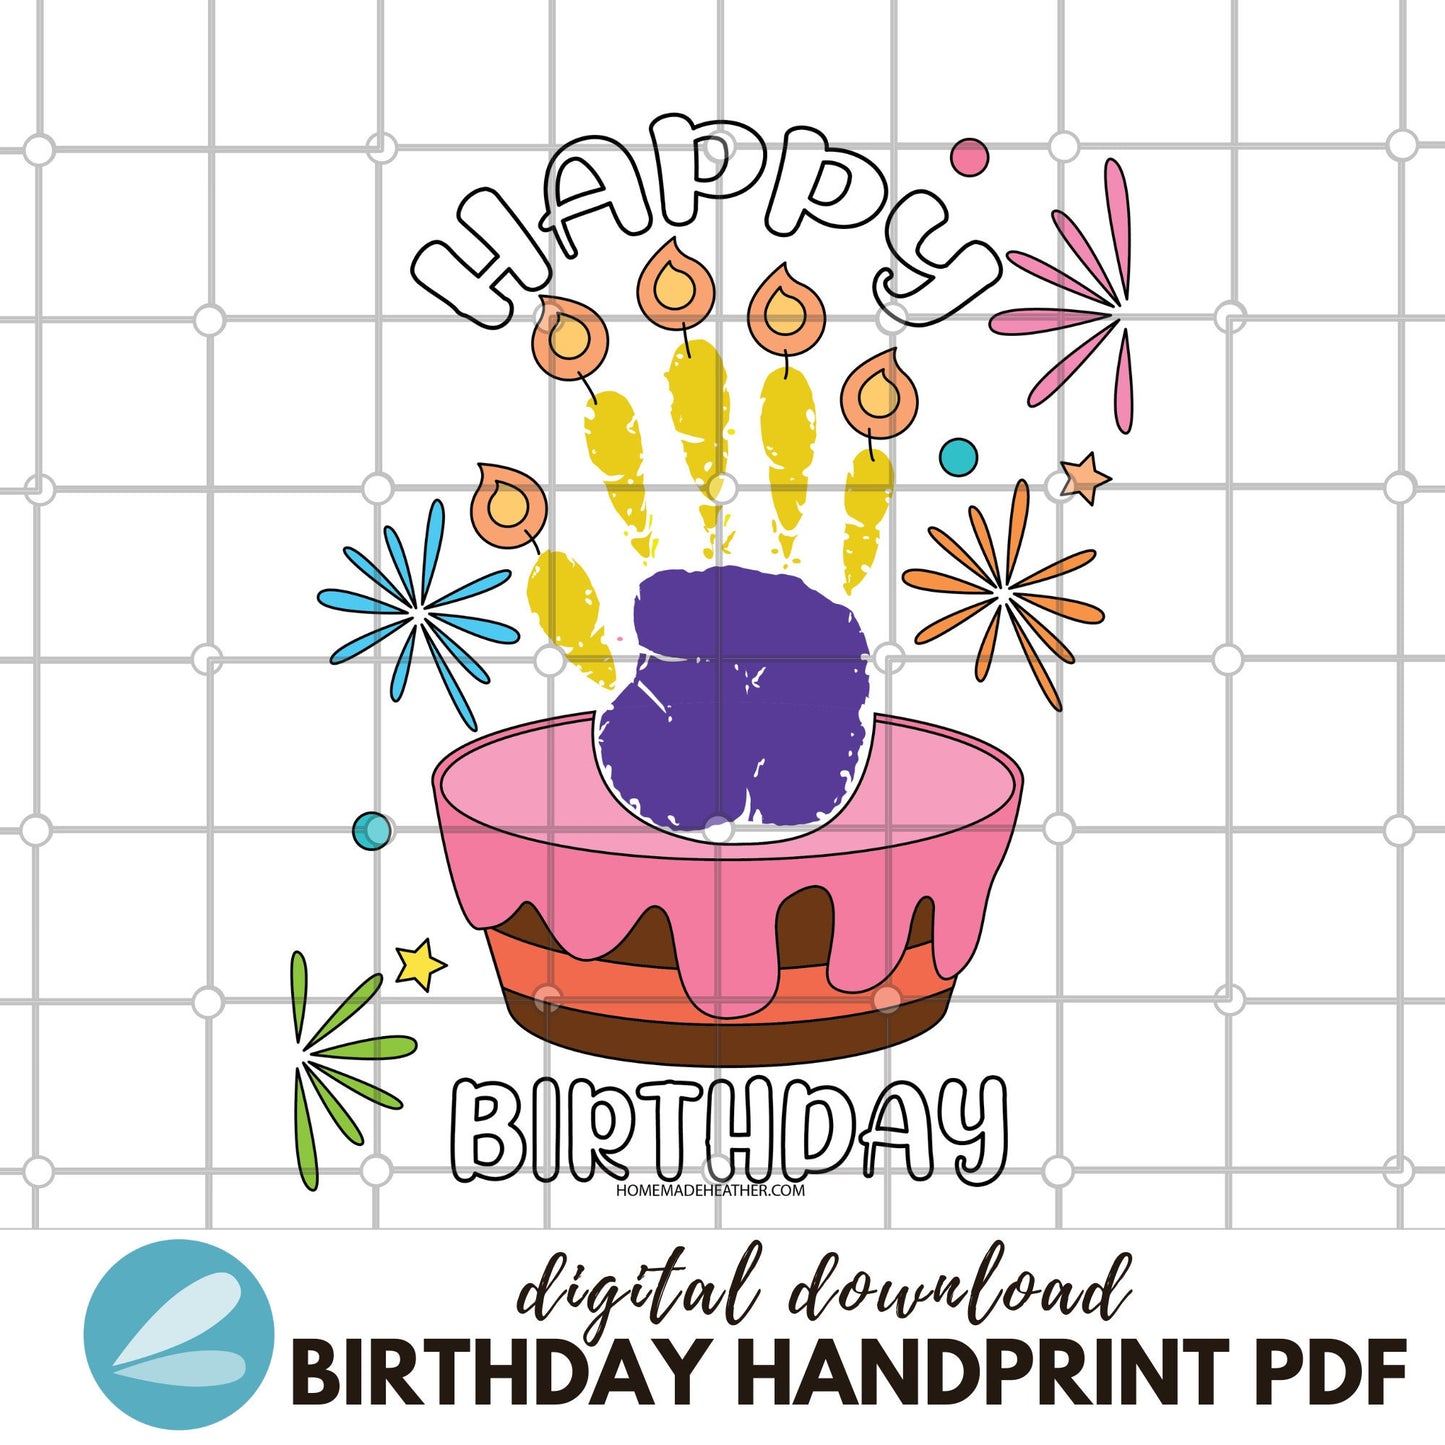 Birthday Printable Handprint Art Templates - Birthday Handprint ART PDF - Instant Download